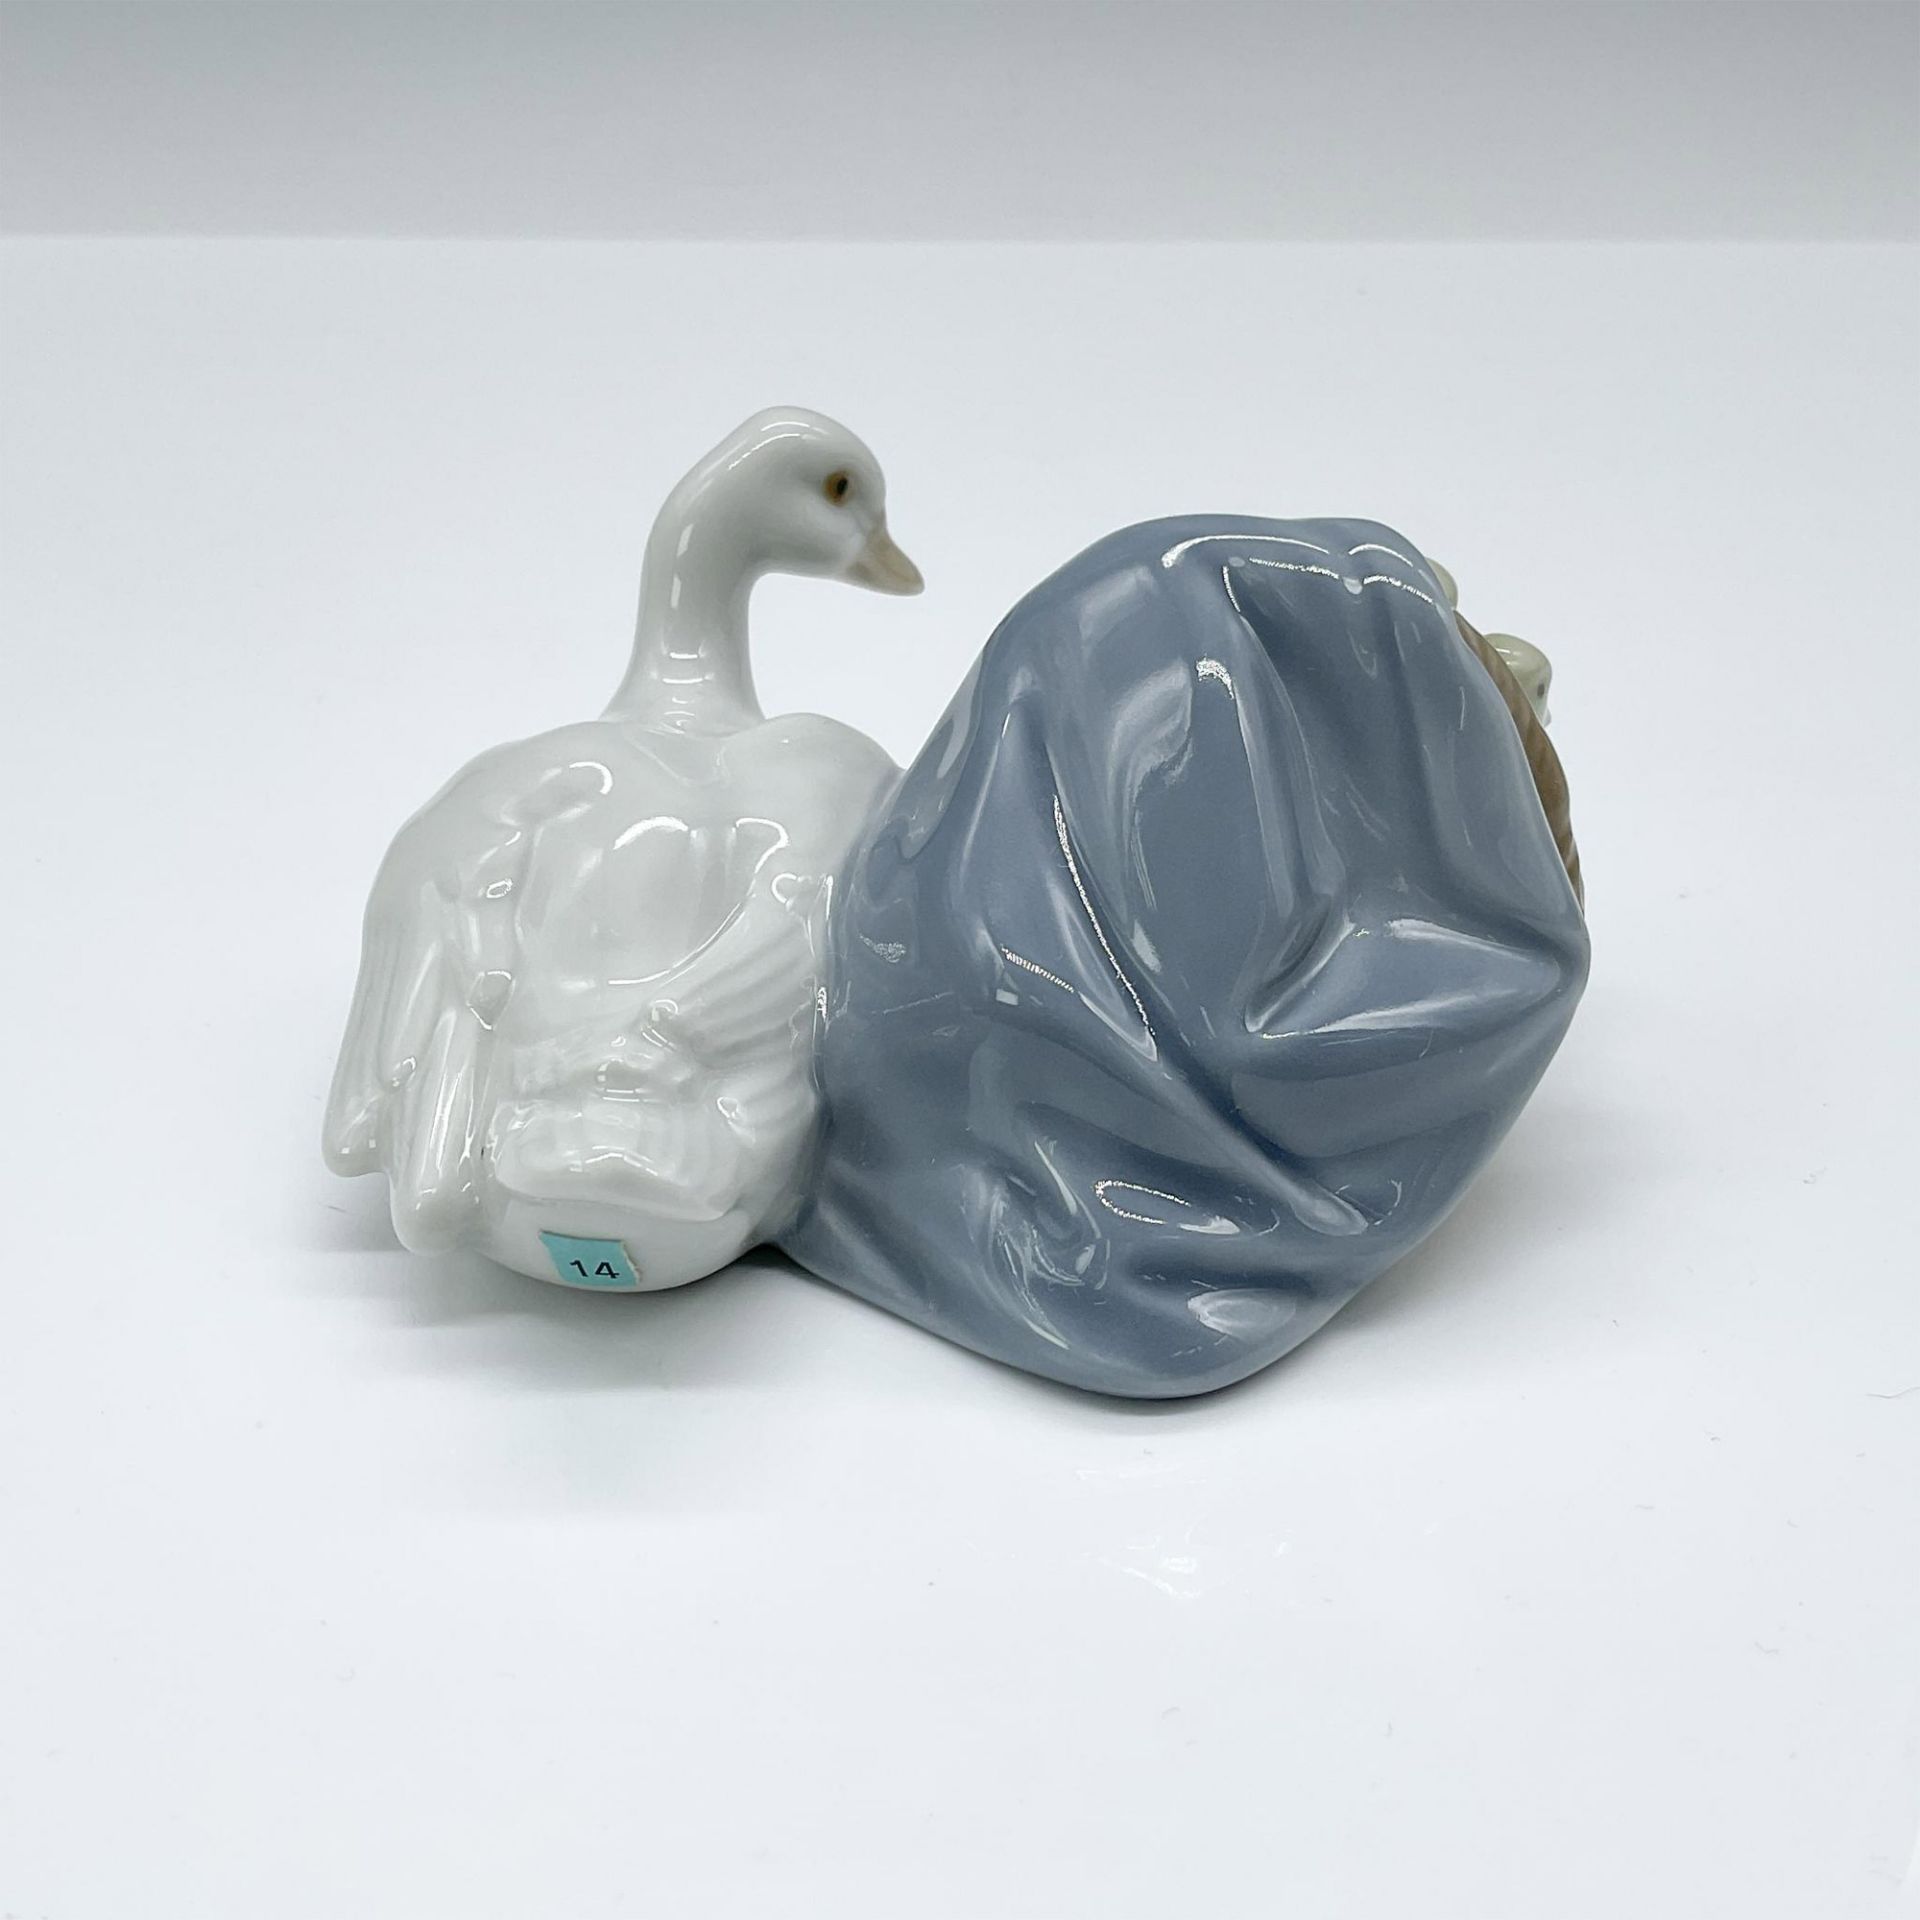 Ducks 1004895 - Lladro Porcelain Figurine - Image 2 of 3